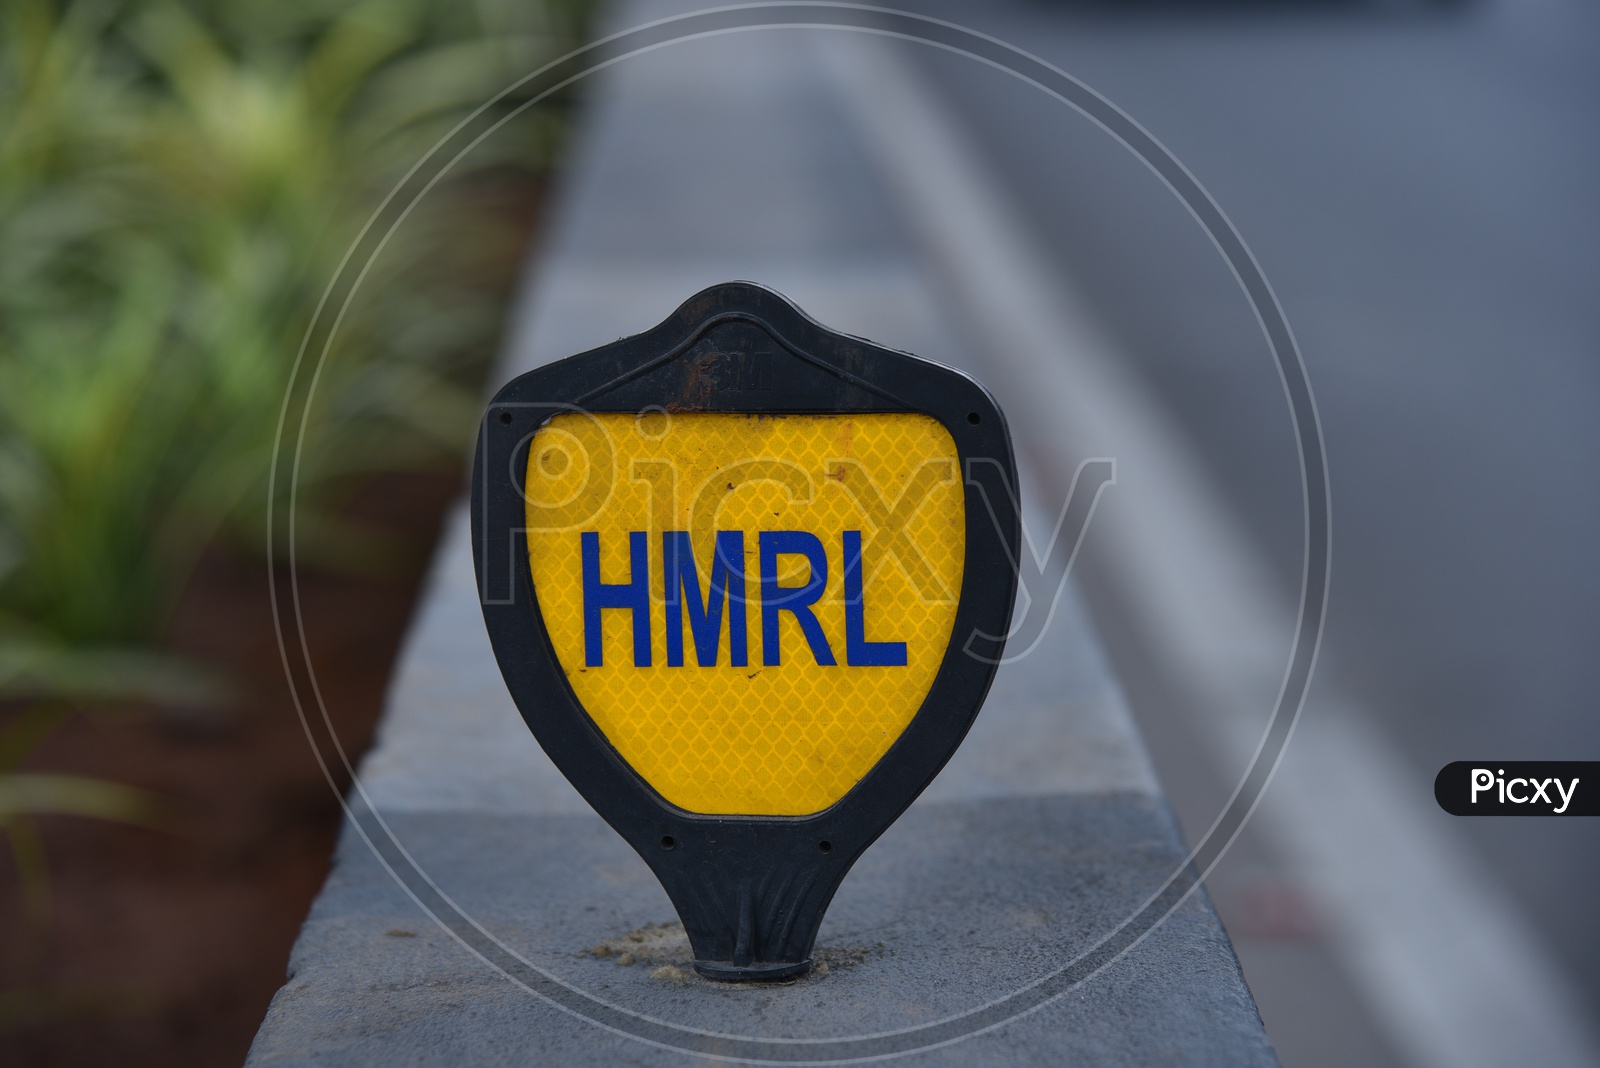 hmrl, hyderabad metro rail limited